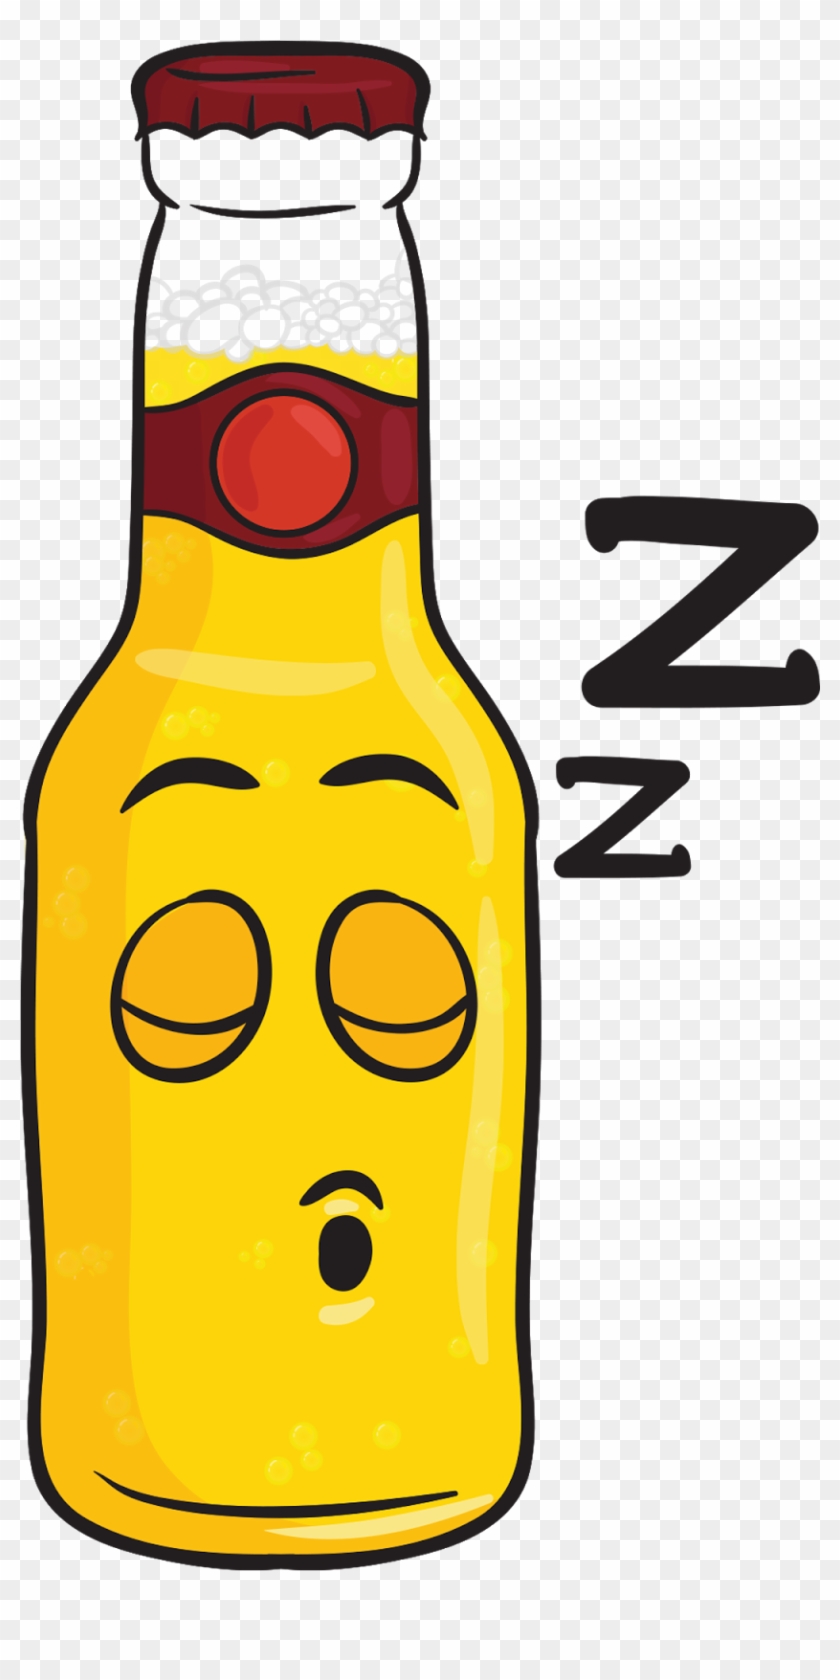 Upcoming Jacksonville Craft Beer Events - Beer Emoji Bottle #1693851